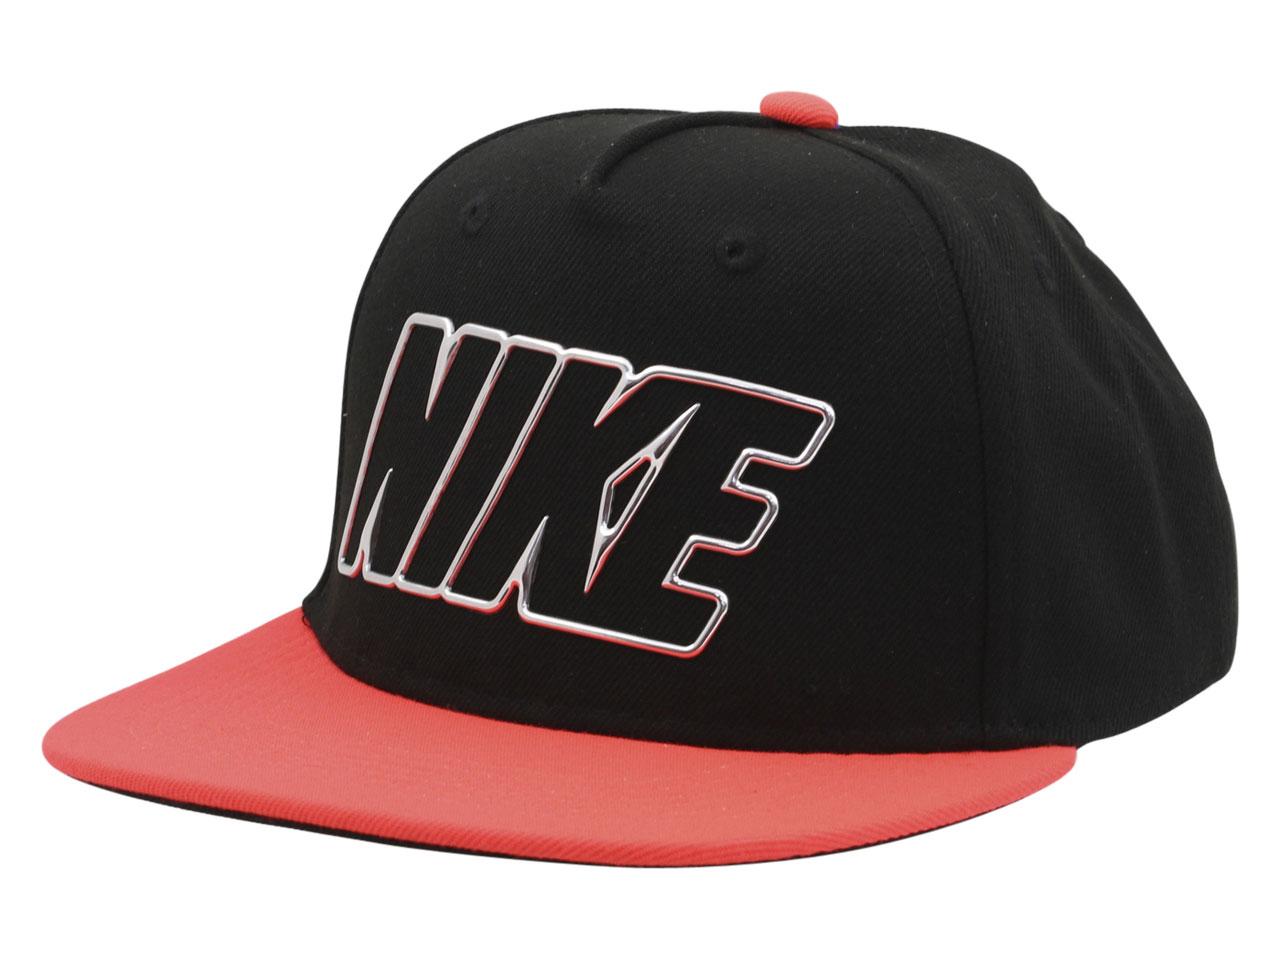 Nike Little Boy's Crystal Club Snapback Baseball Cap Hat - Bright Crimson/Black - 4/7